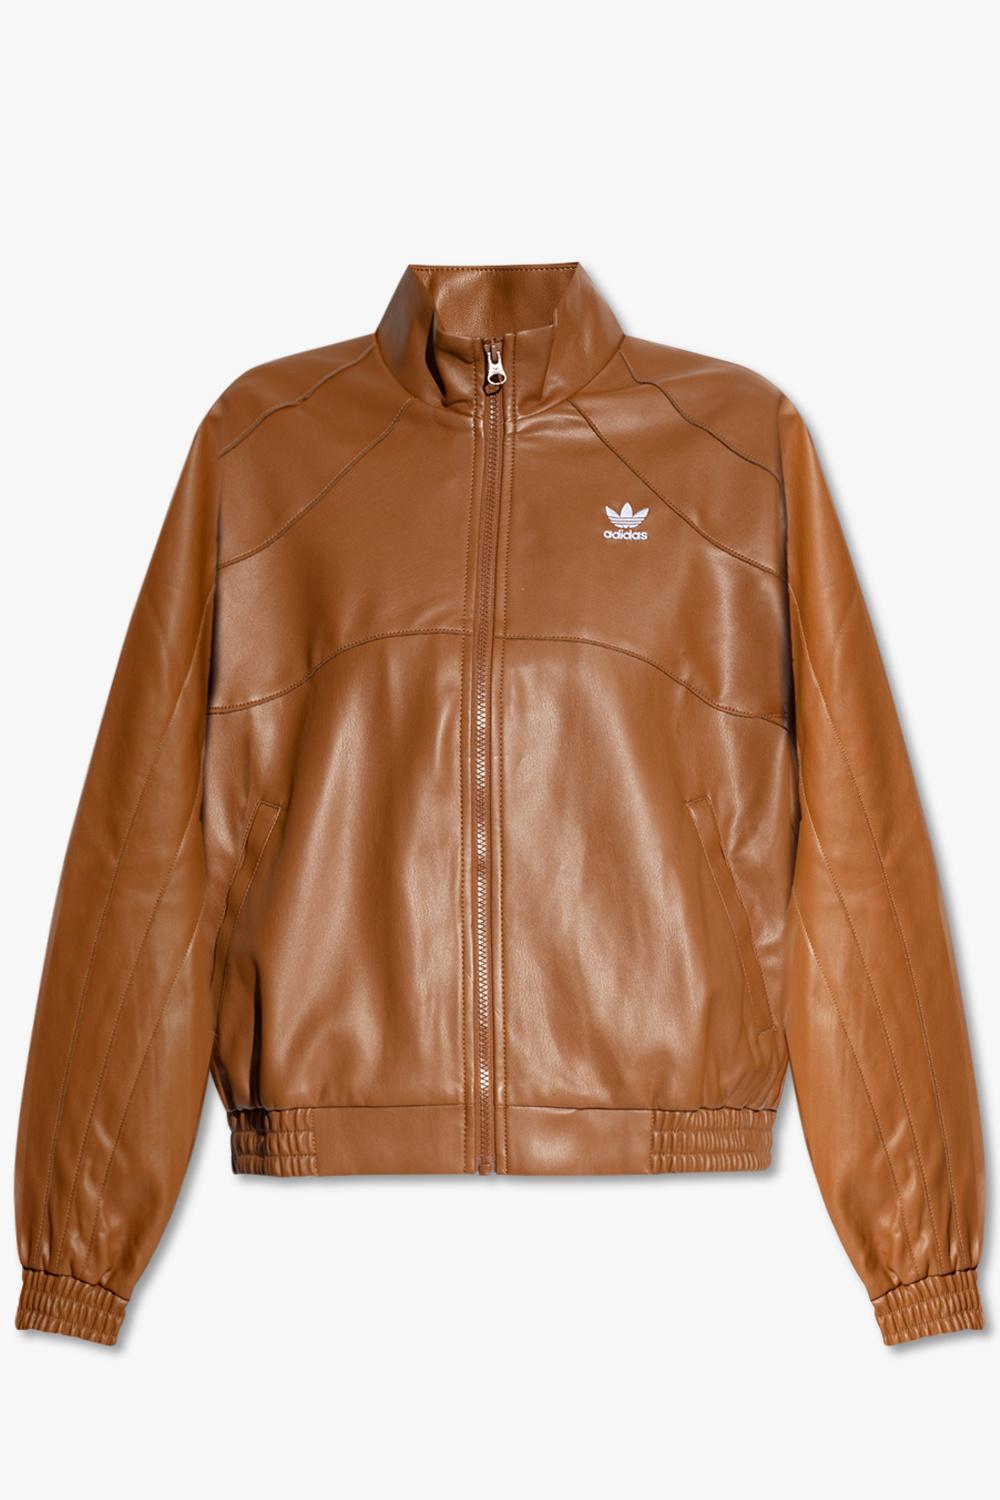 adidas Originals Jacket in Brown Lyst